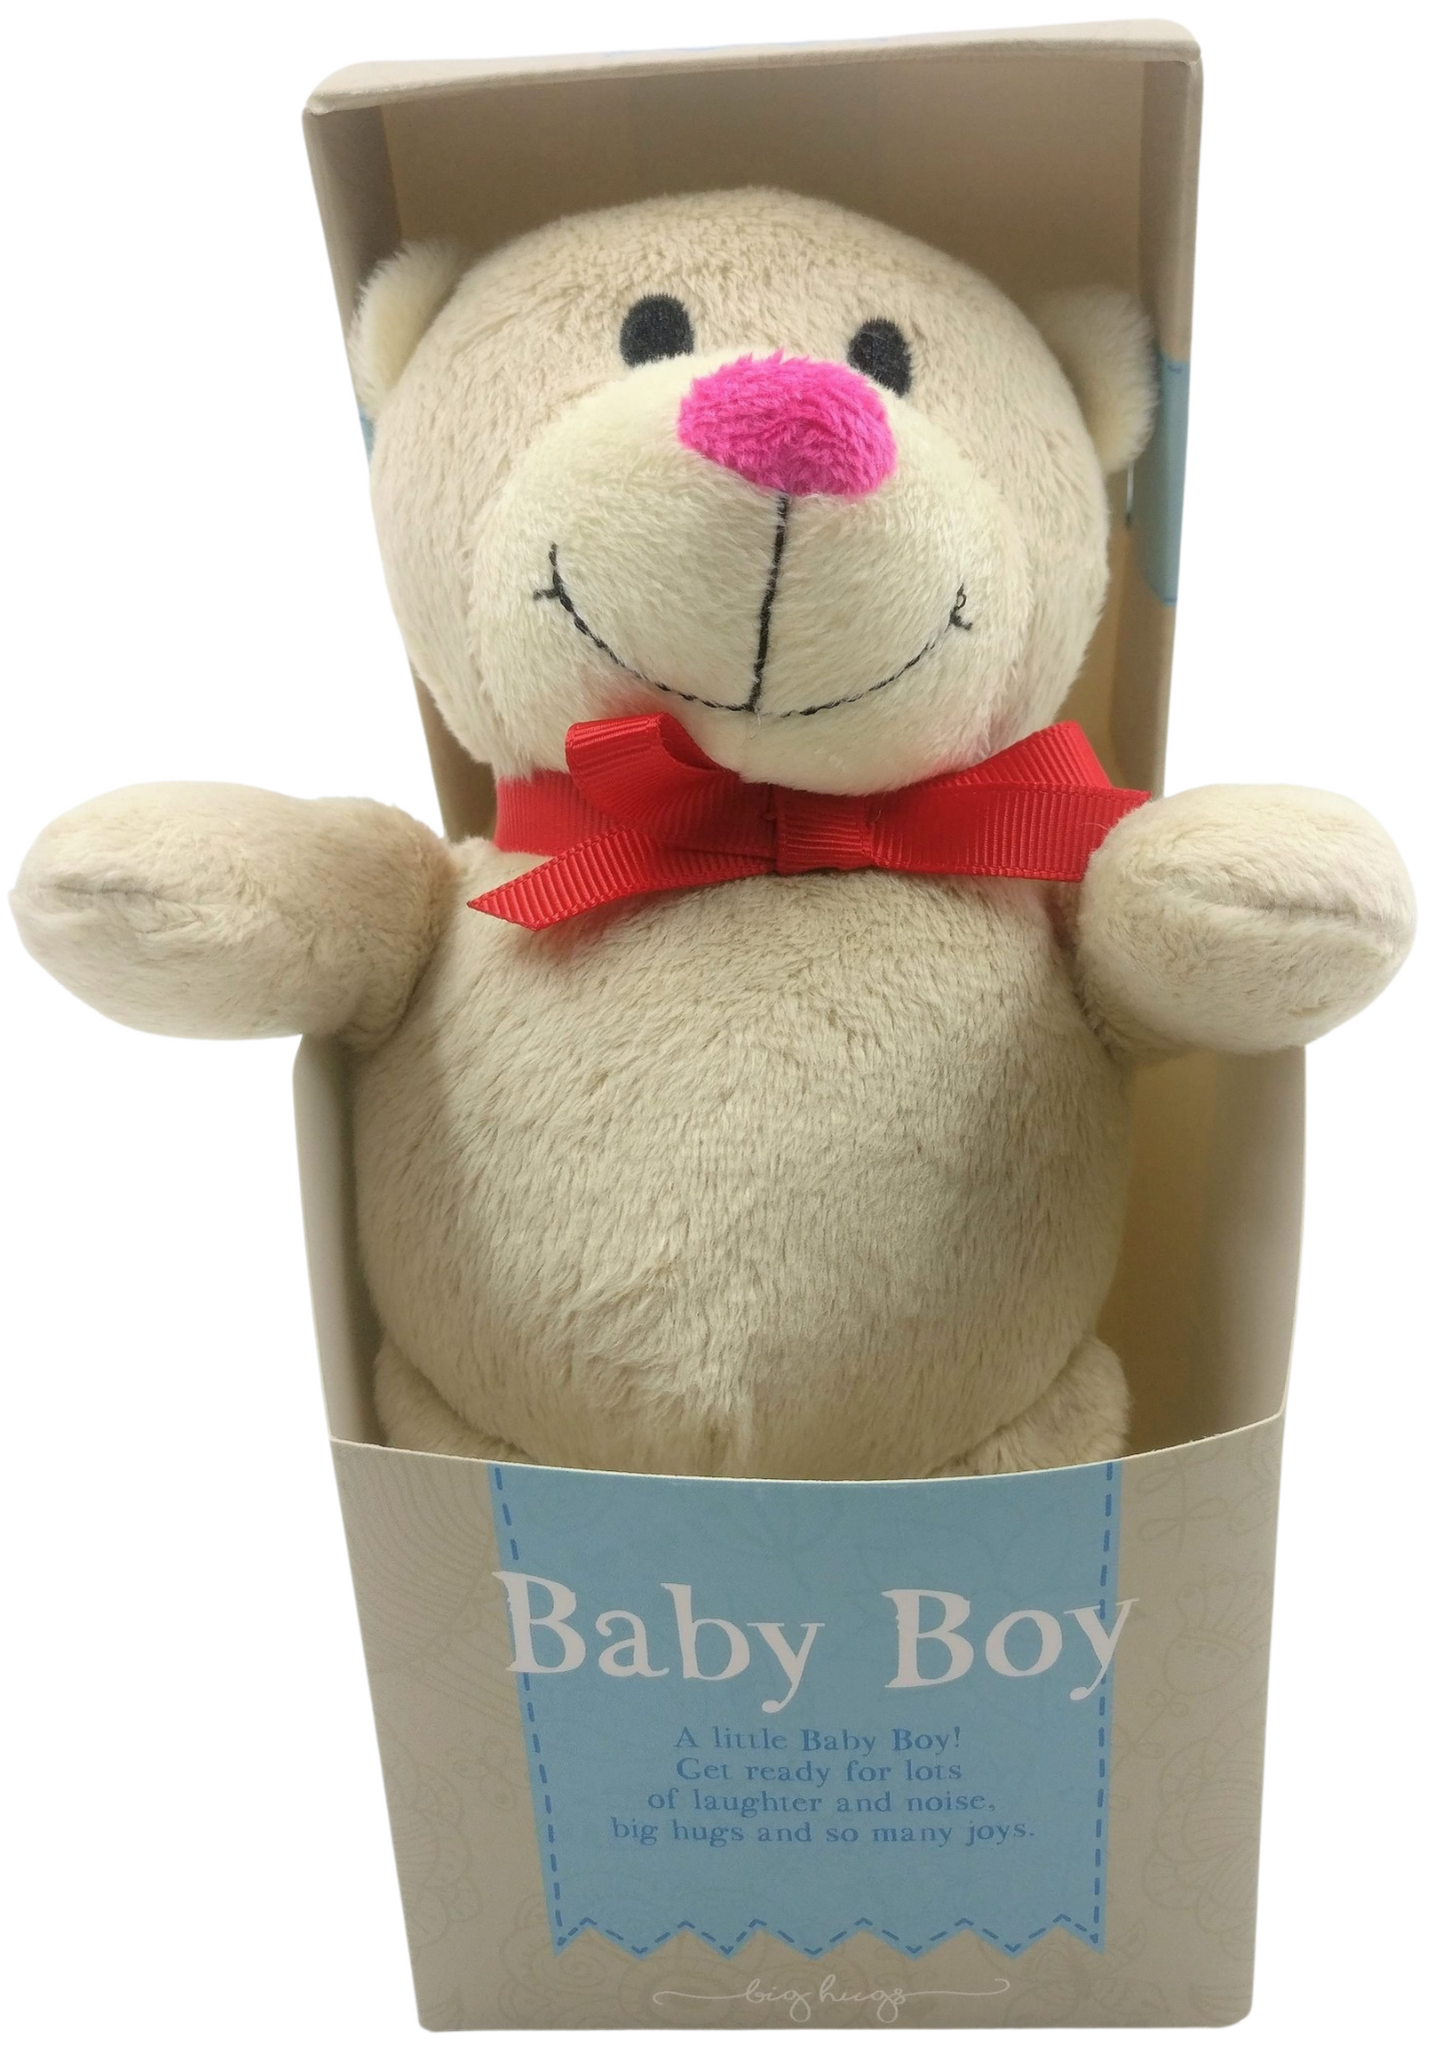 Baby Boy Bear in a Box